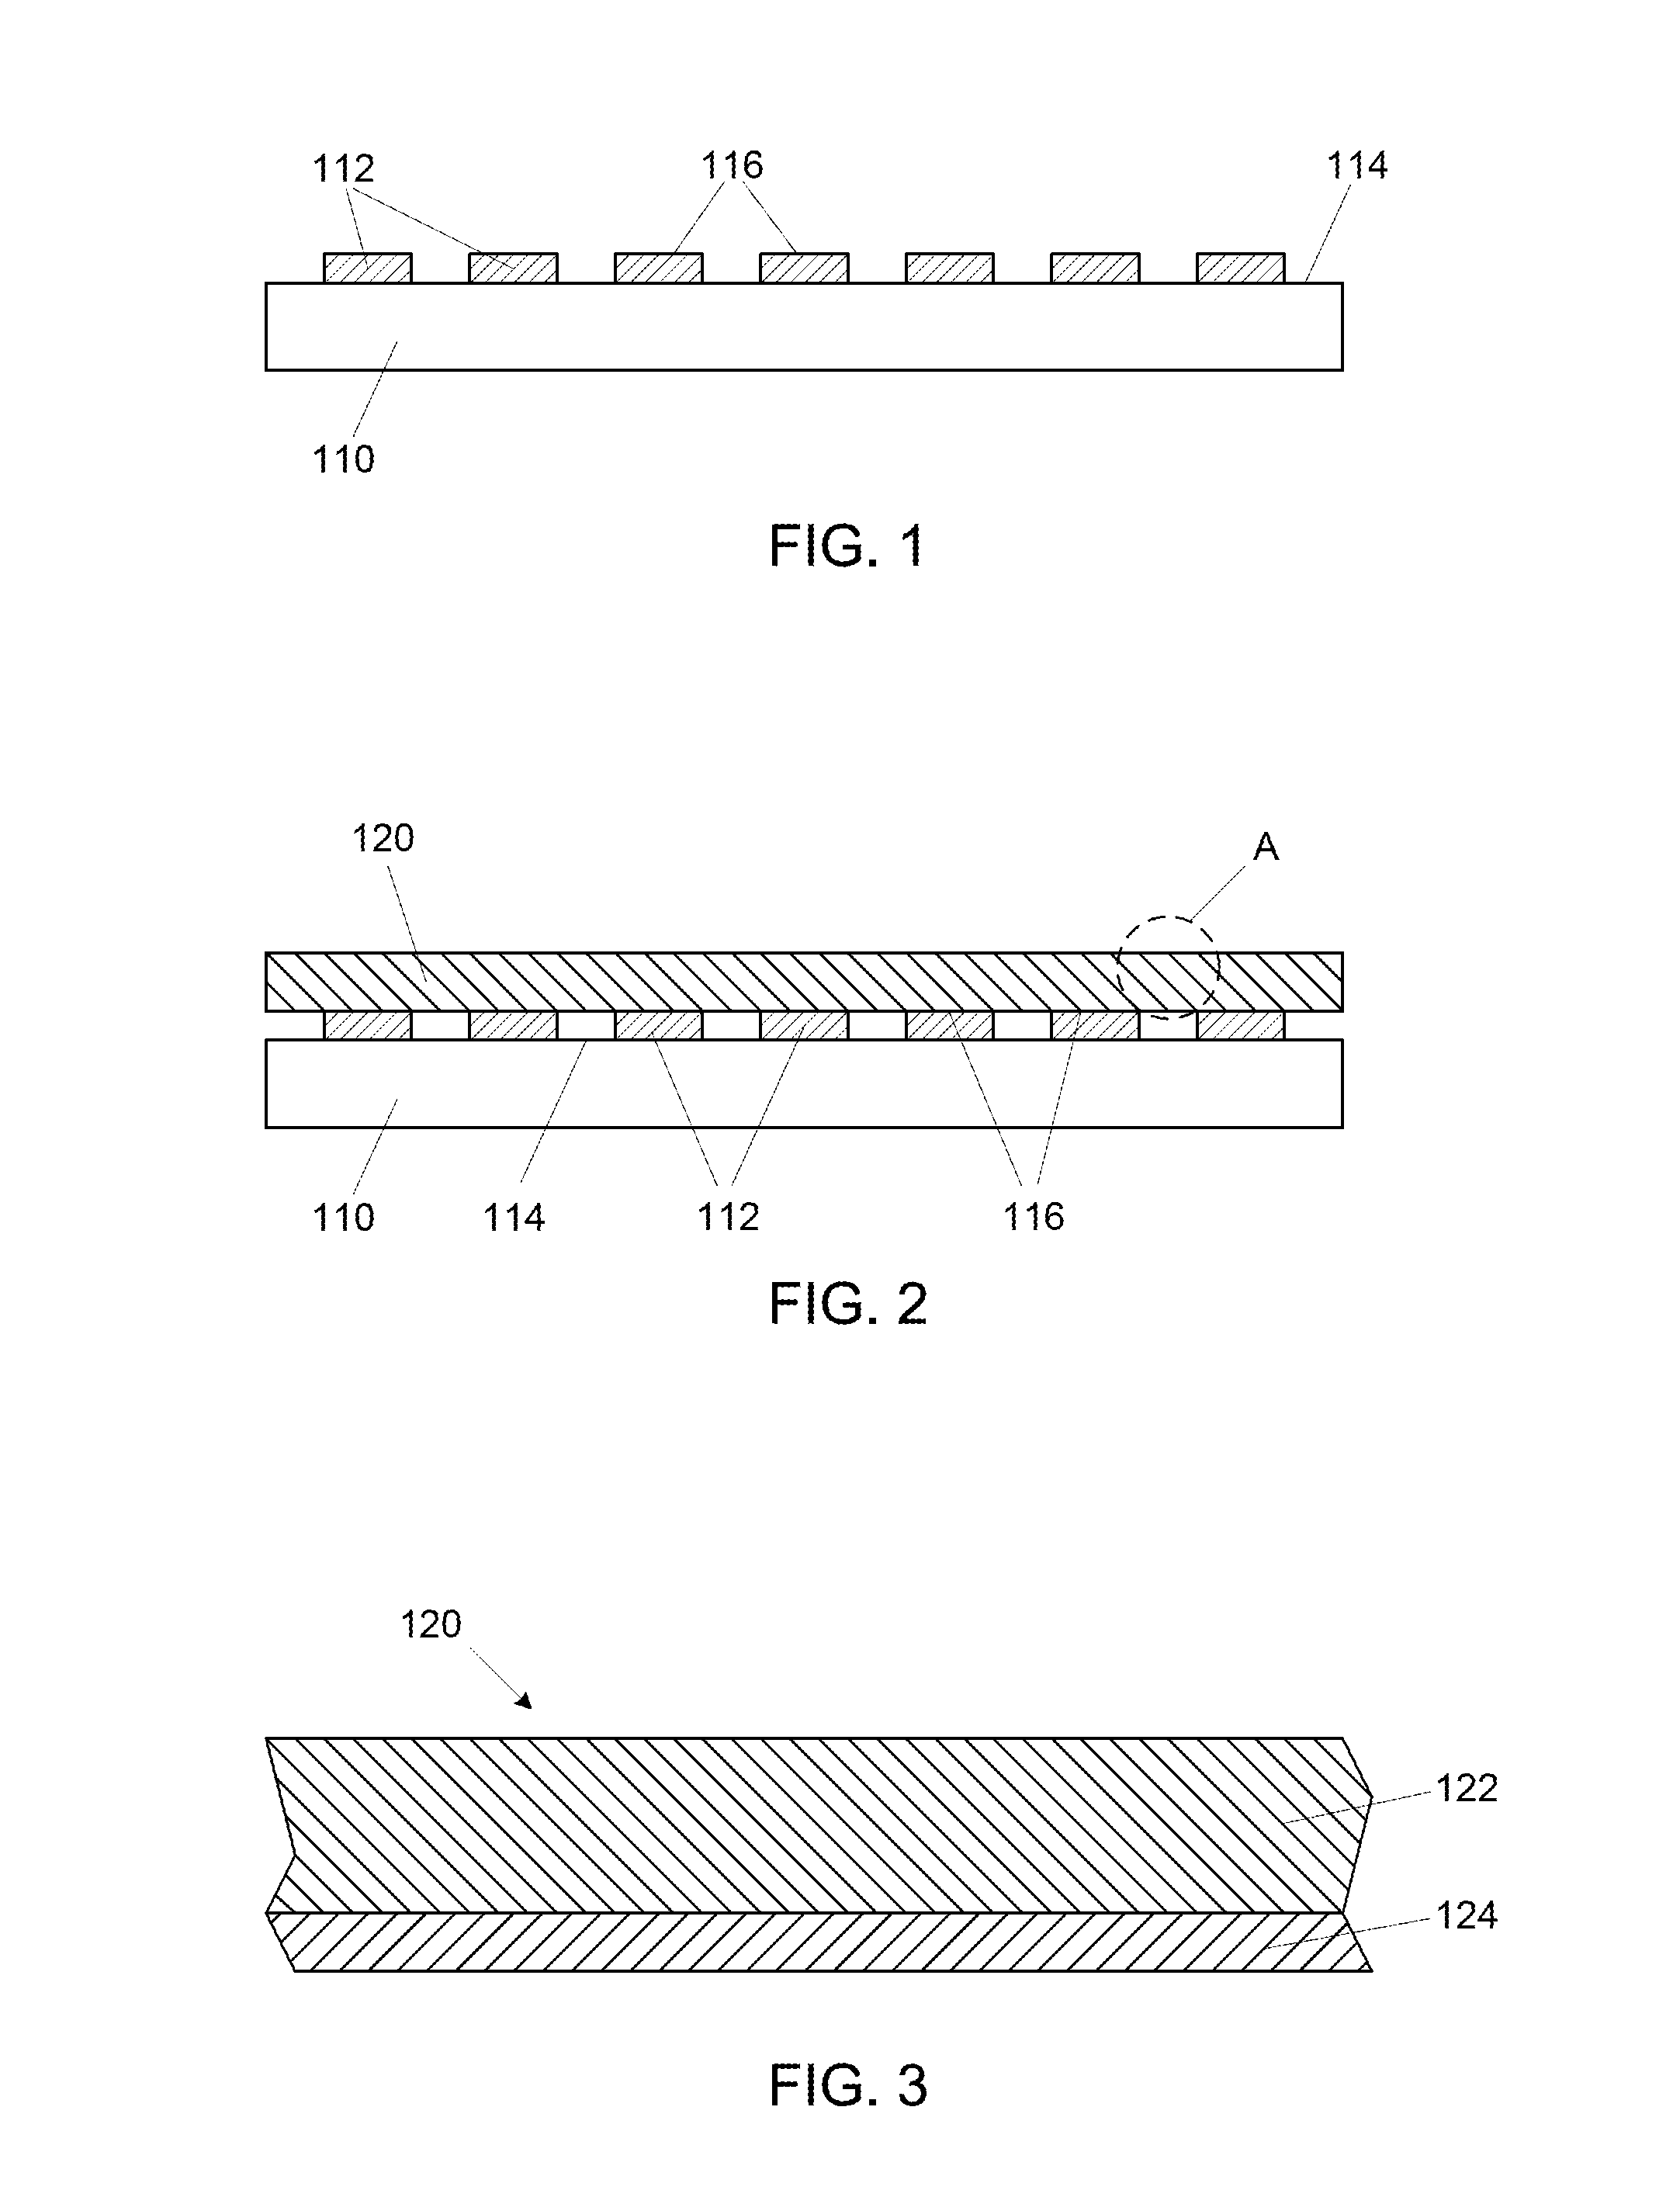 Laser ablation tape for solder interconnect formation